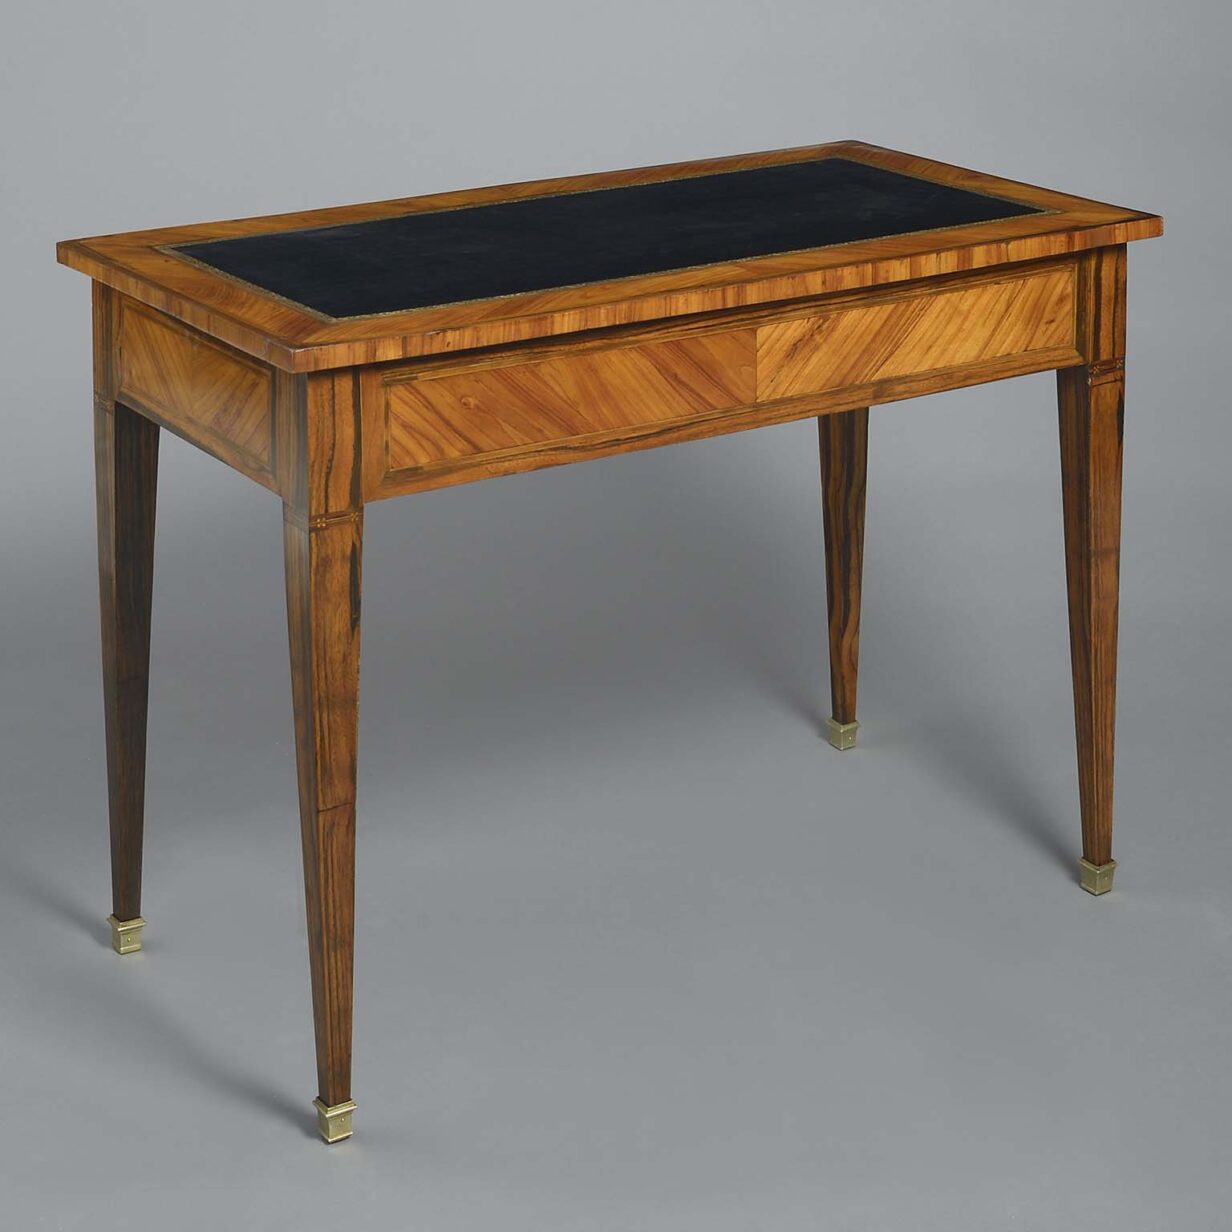 Late 18th century louis xvi period tulipwood writing table